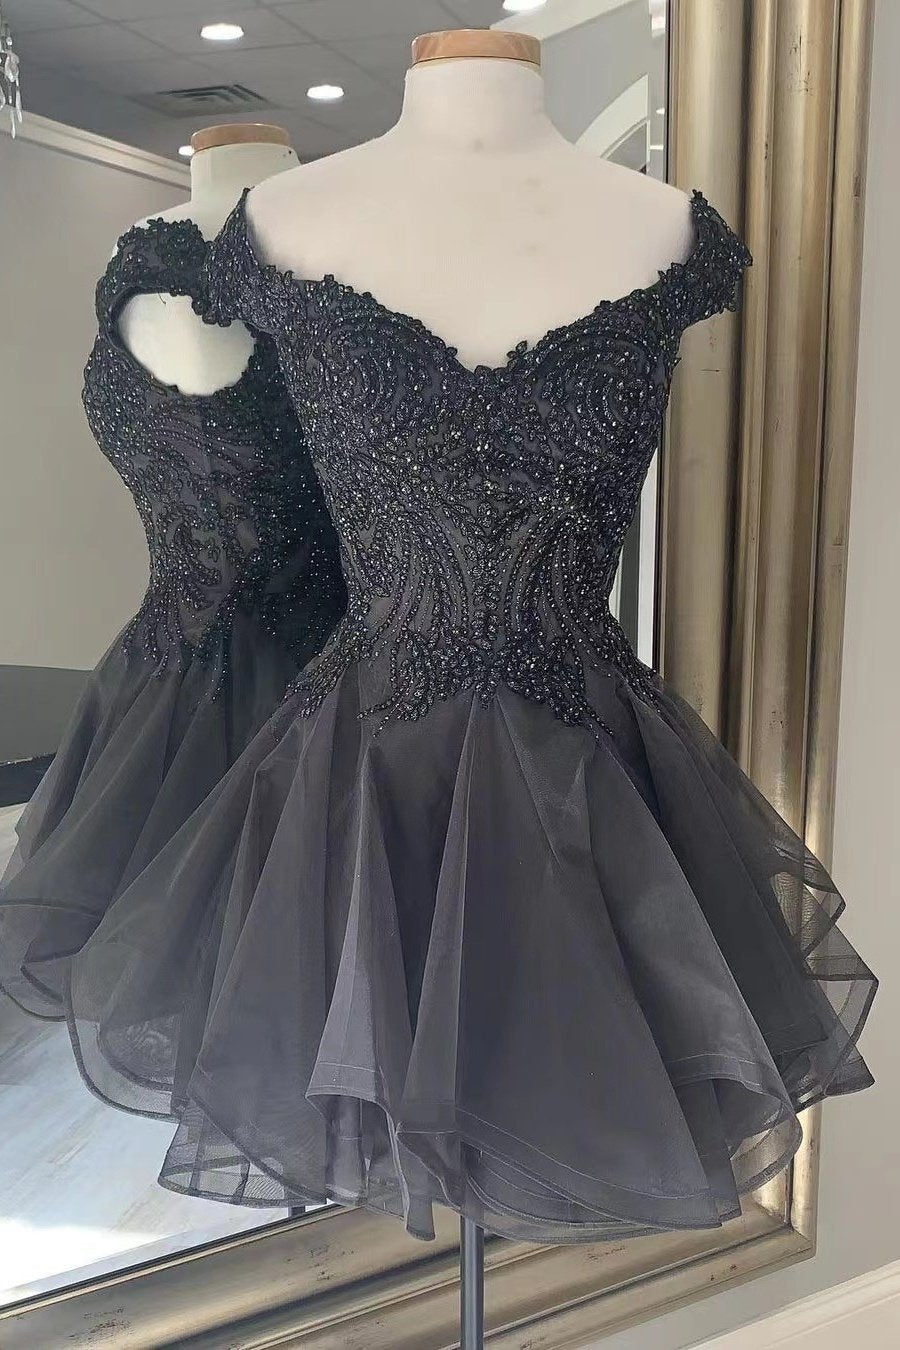 Black Off The Shoulder Short Prom Dress Beauty Homecoming Dresses Y0184